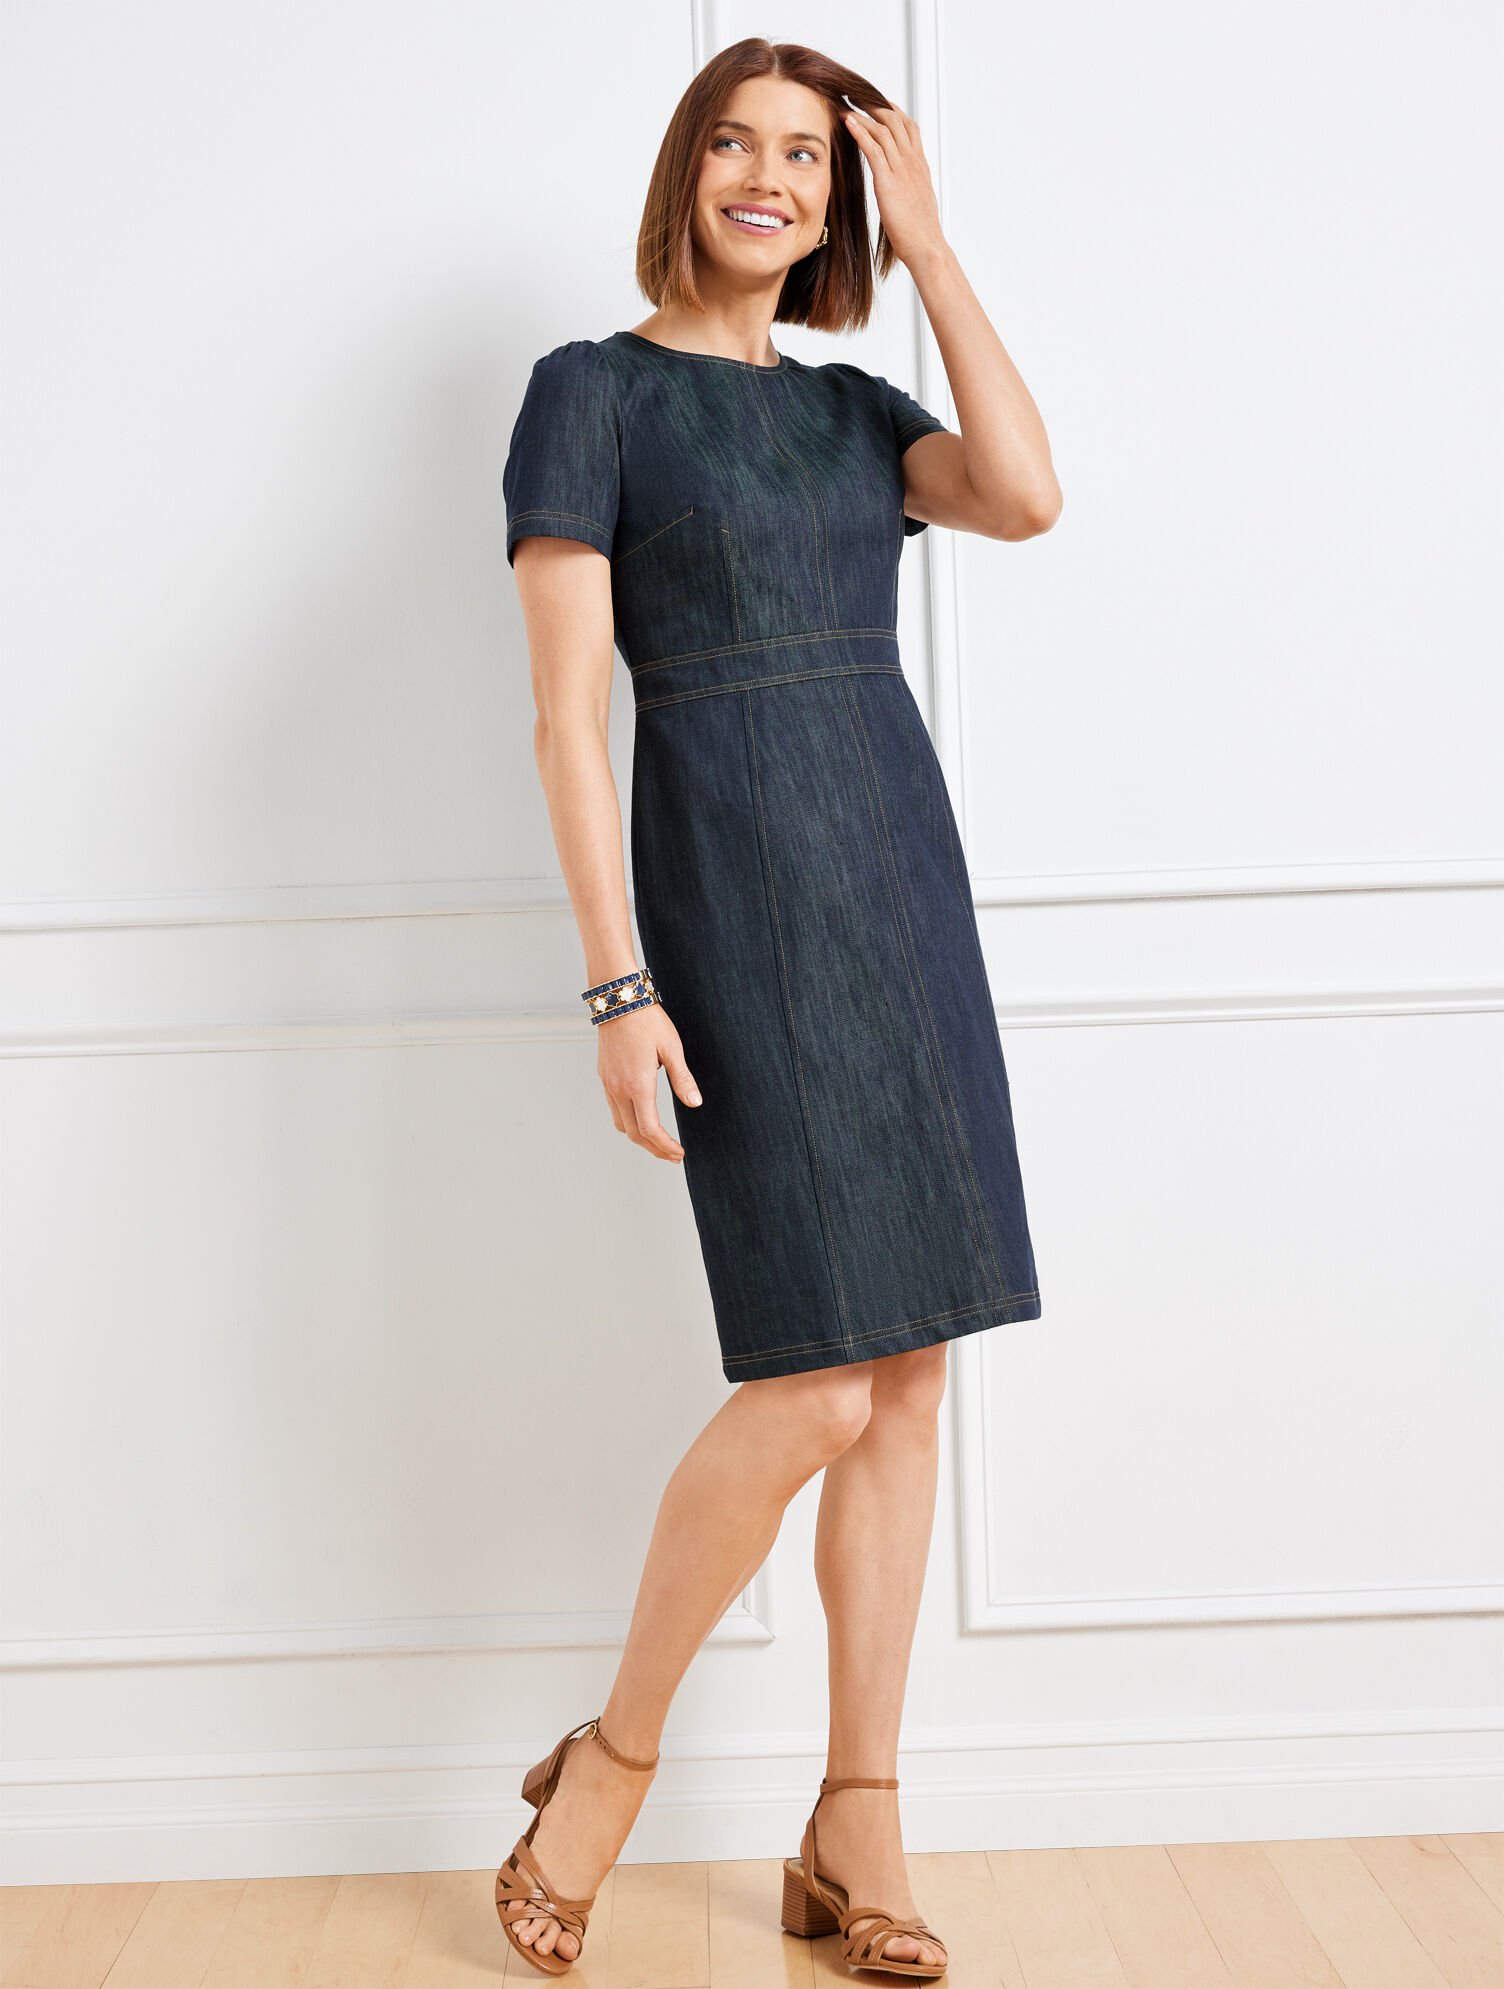 TALBOTS Women's Sleeveless Blue A-Line Knit Dress Size Petite 4P